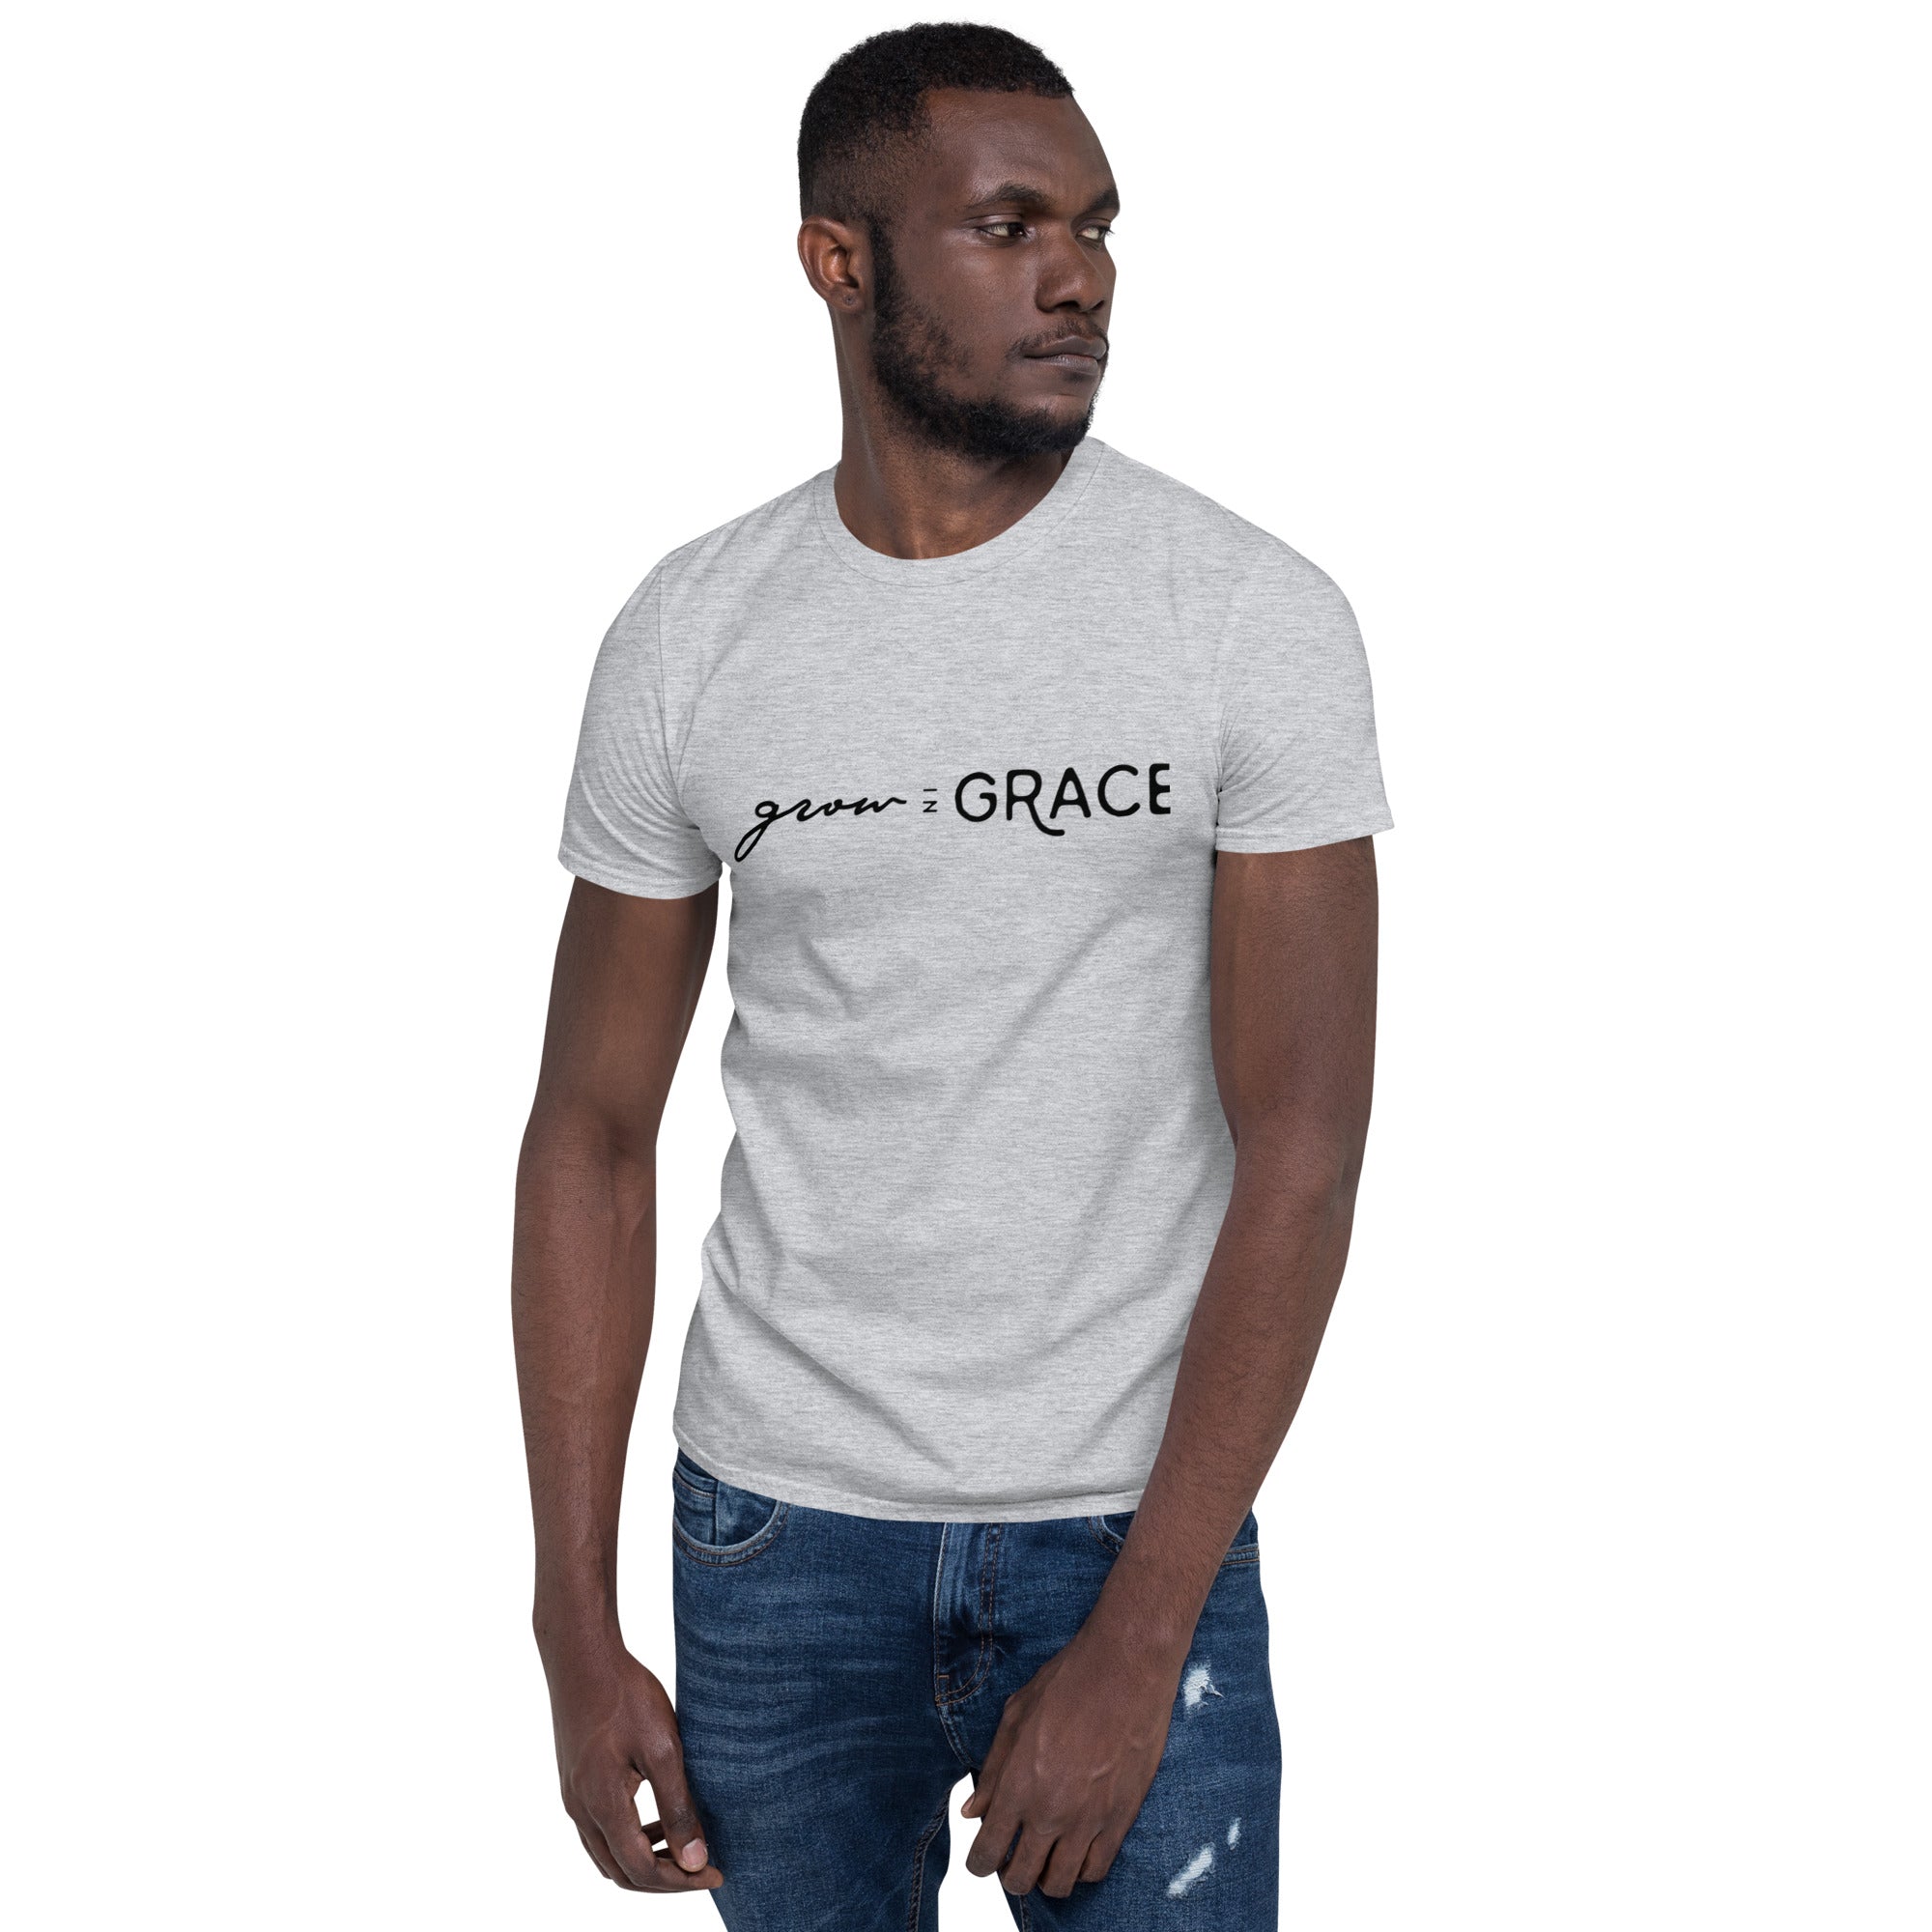 Grow In Grace - Short-Sleeve Unisex T-Shirt